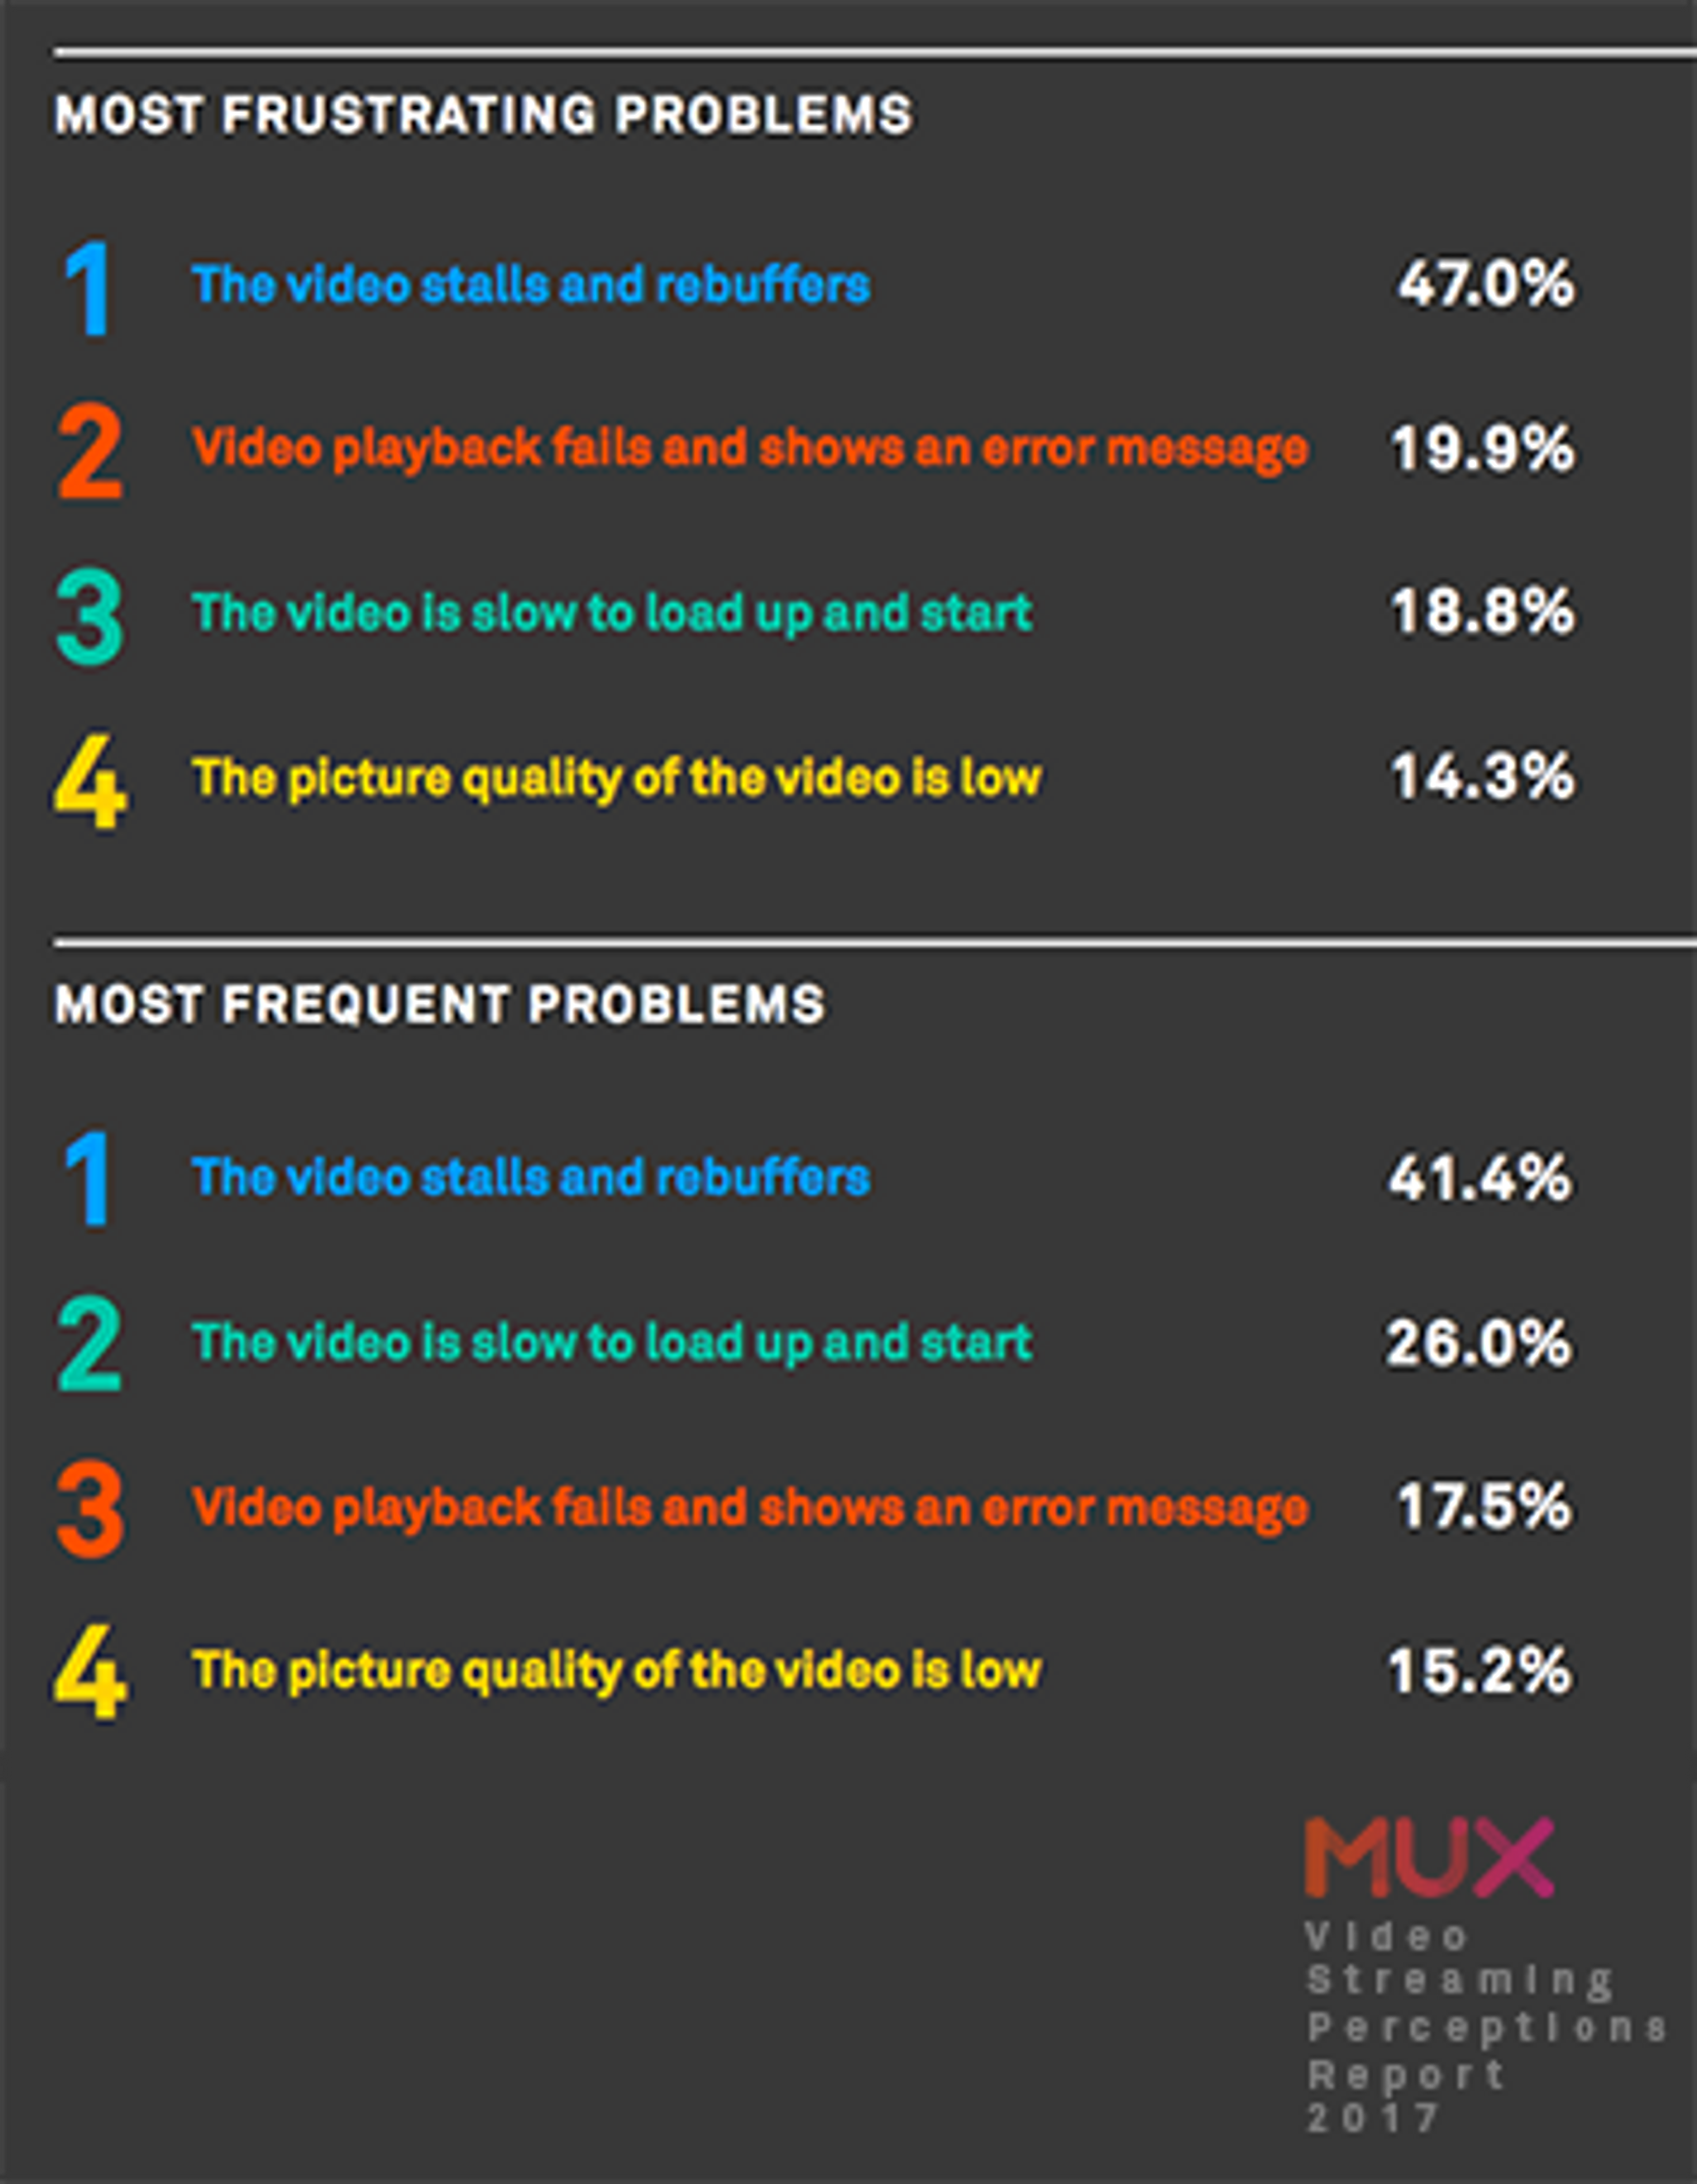 Mux Video Perceptions Report 2017